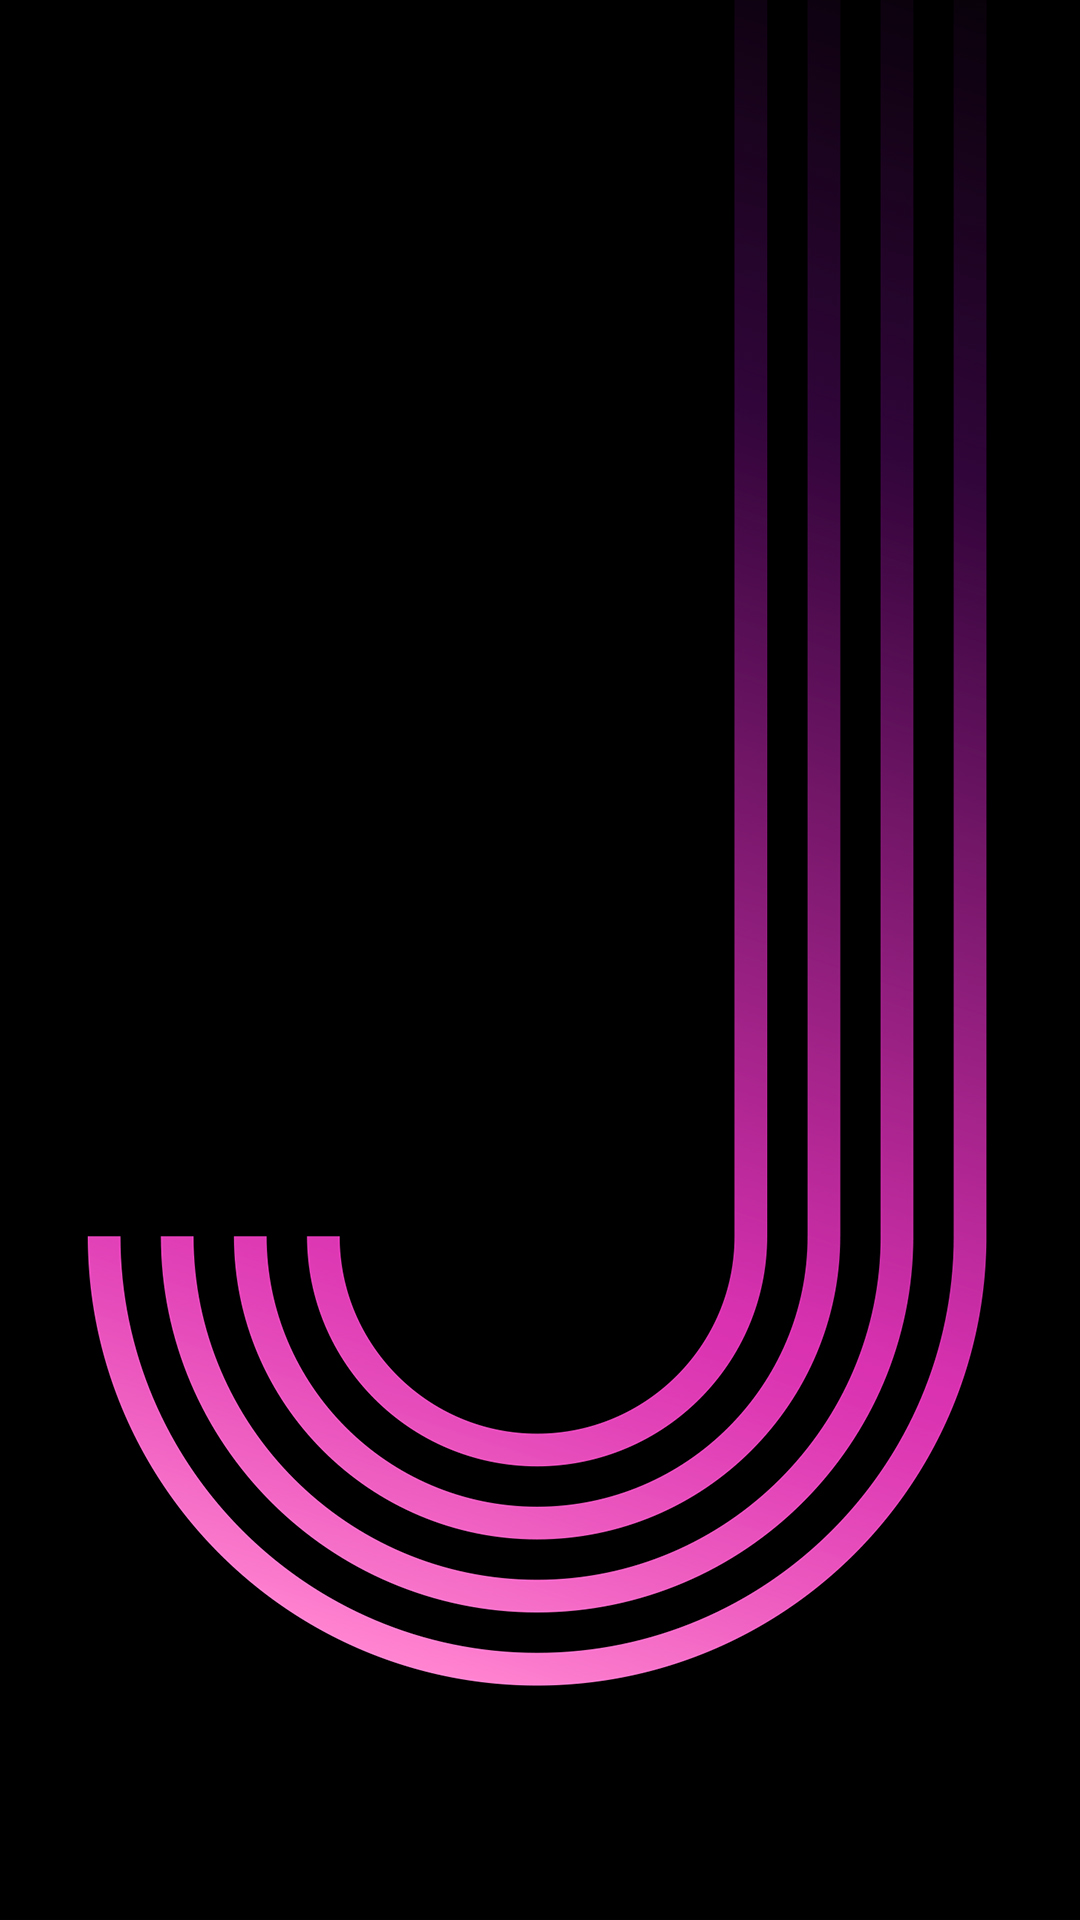 samsung galaxy j5 wallpaper,violet,purple,black,text,pink